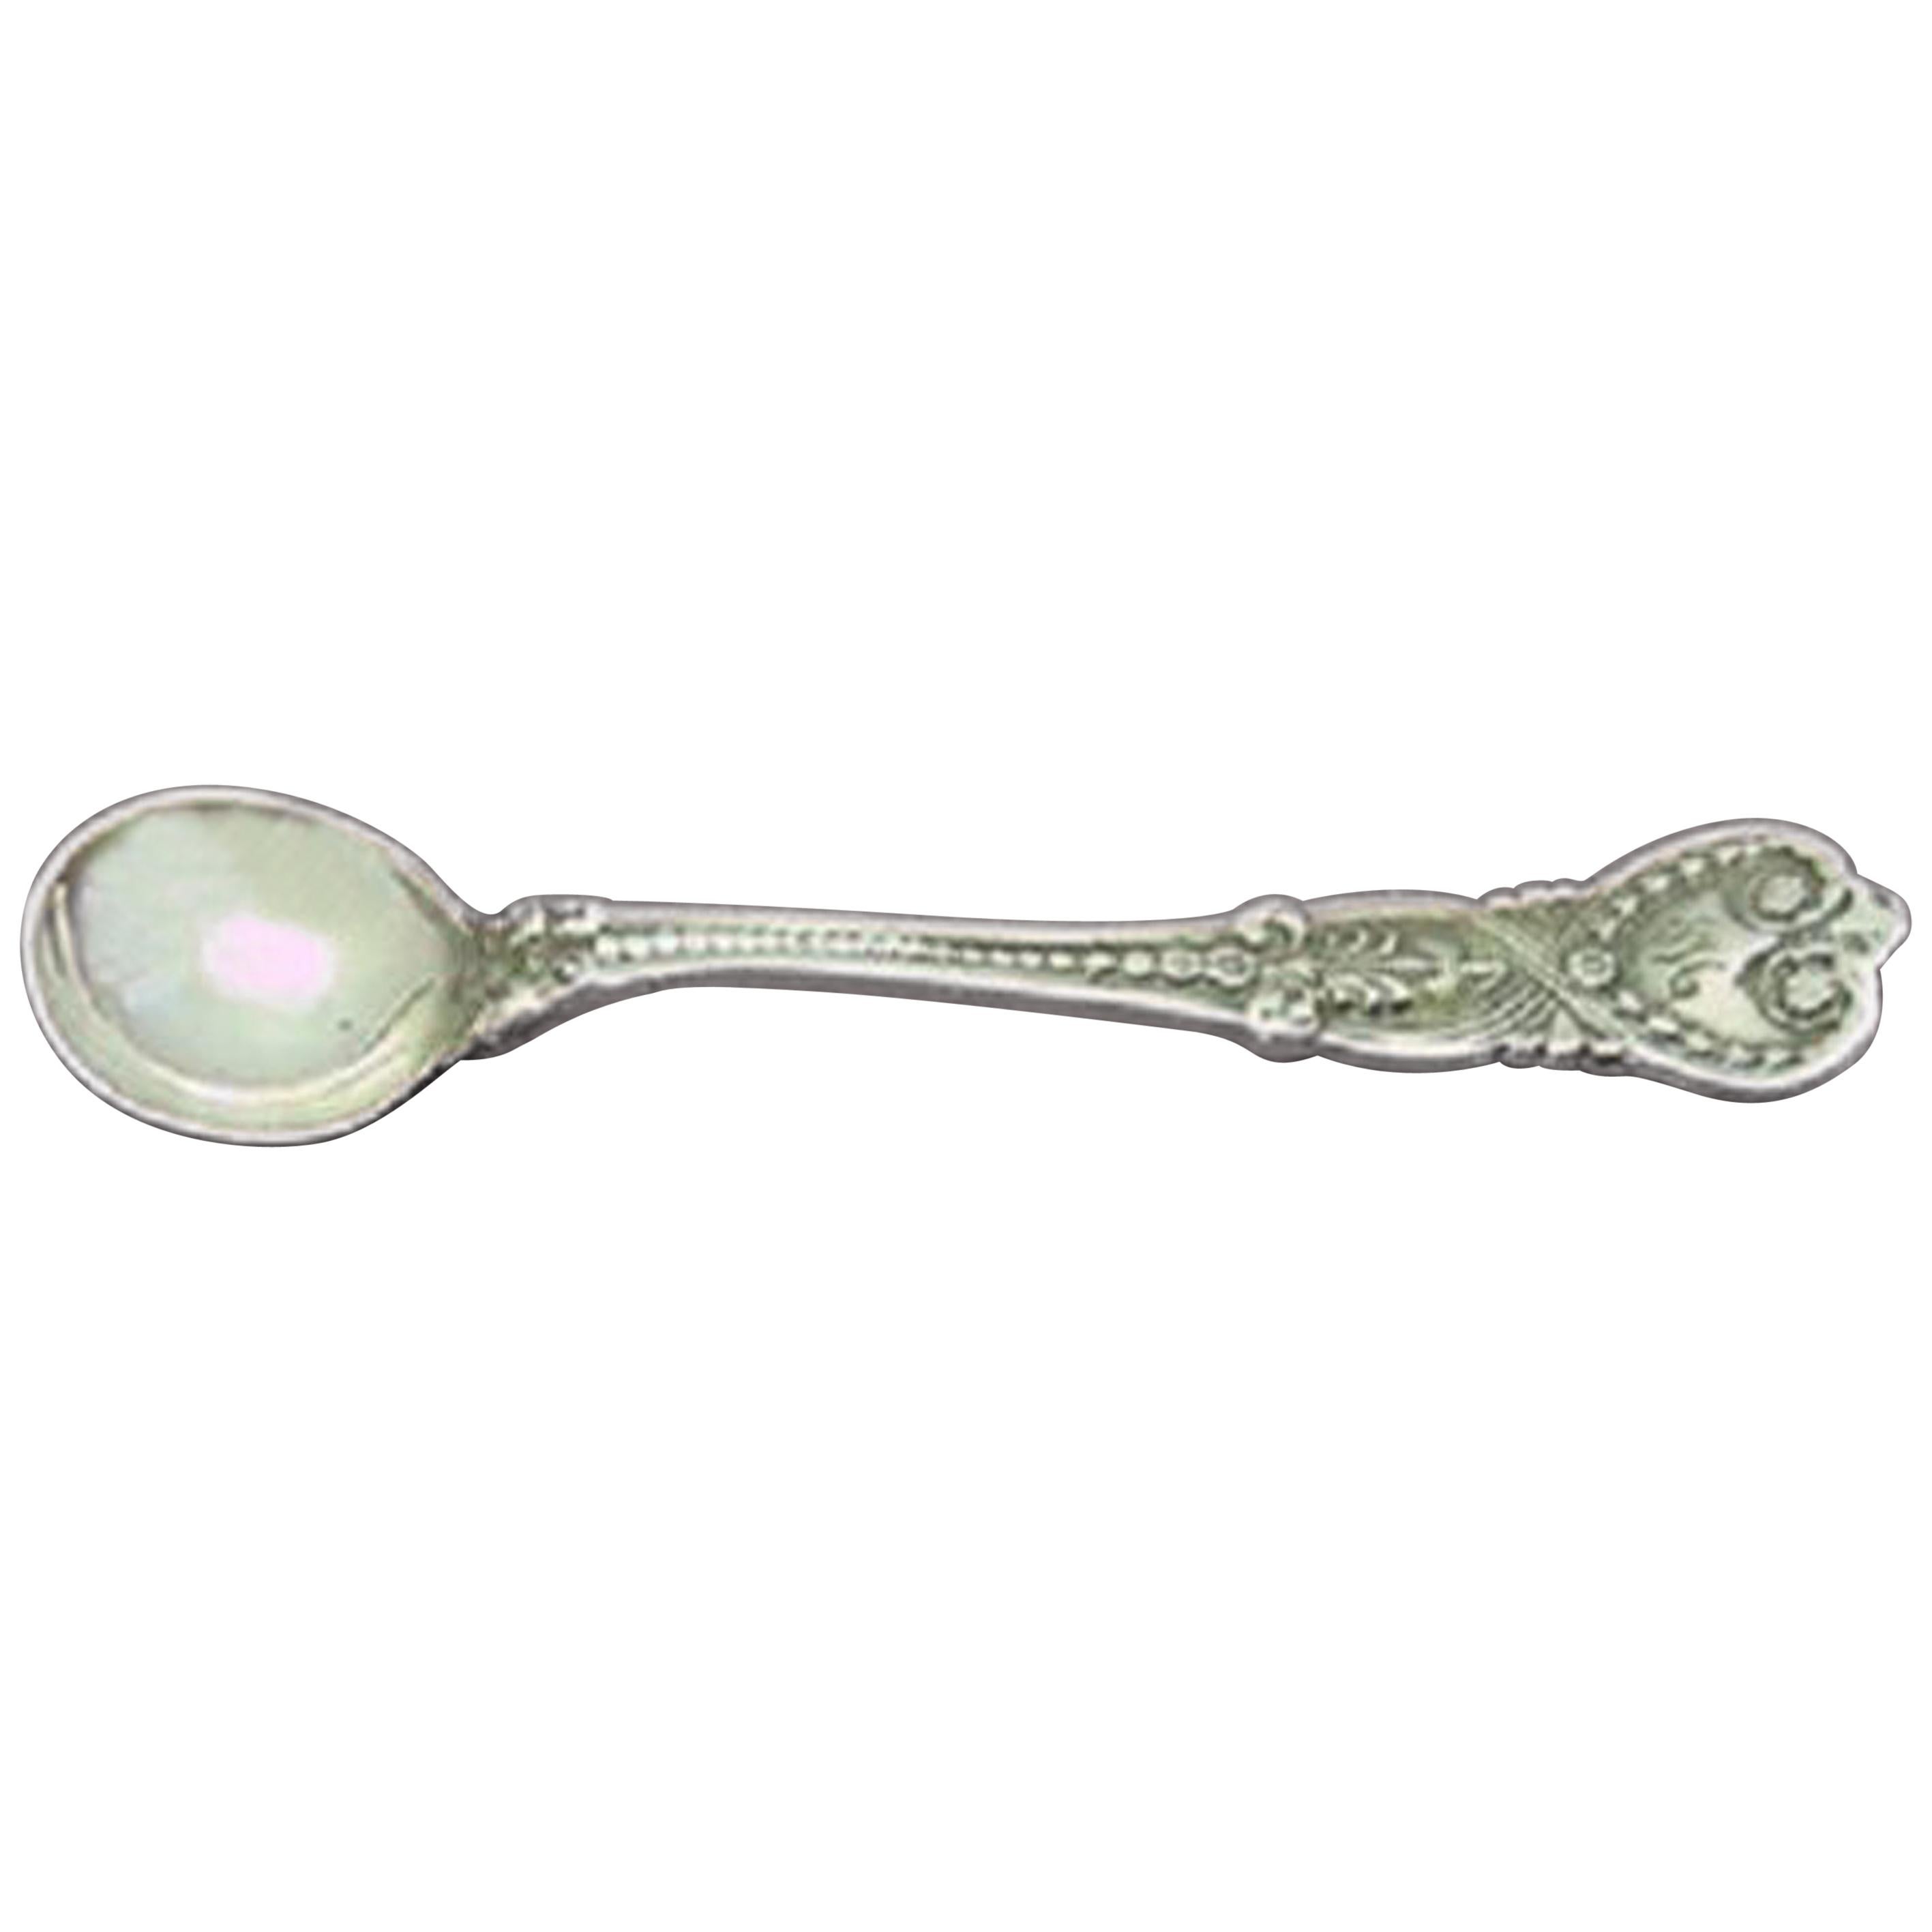 Saint James by Tiffany & Co. Sterling Silver Salt Spoon